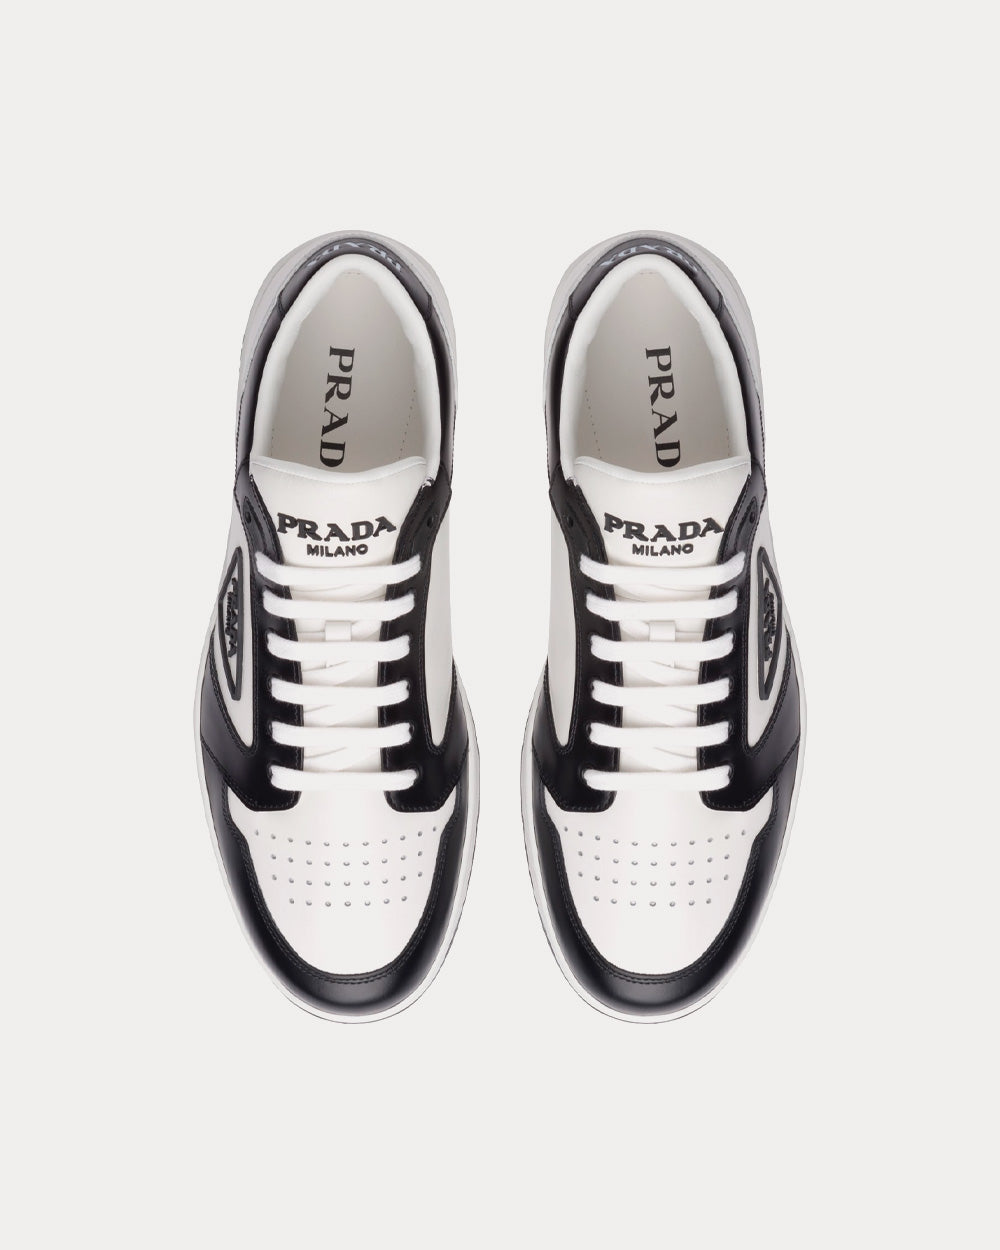 Prada - Sporty Leather Black / White Low Top Sneakers